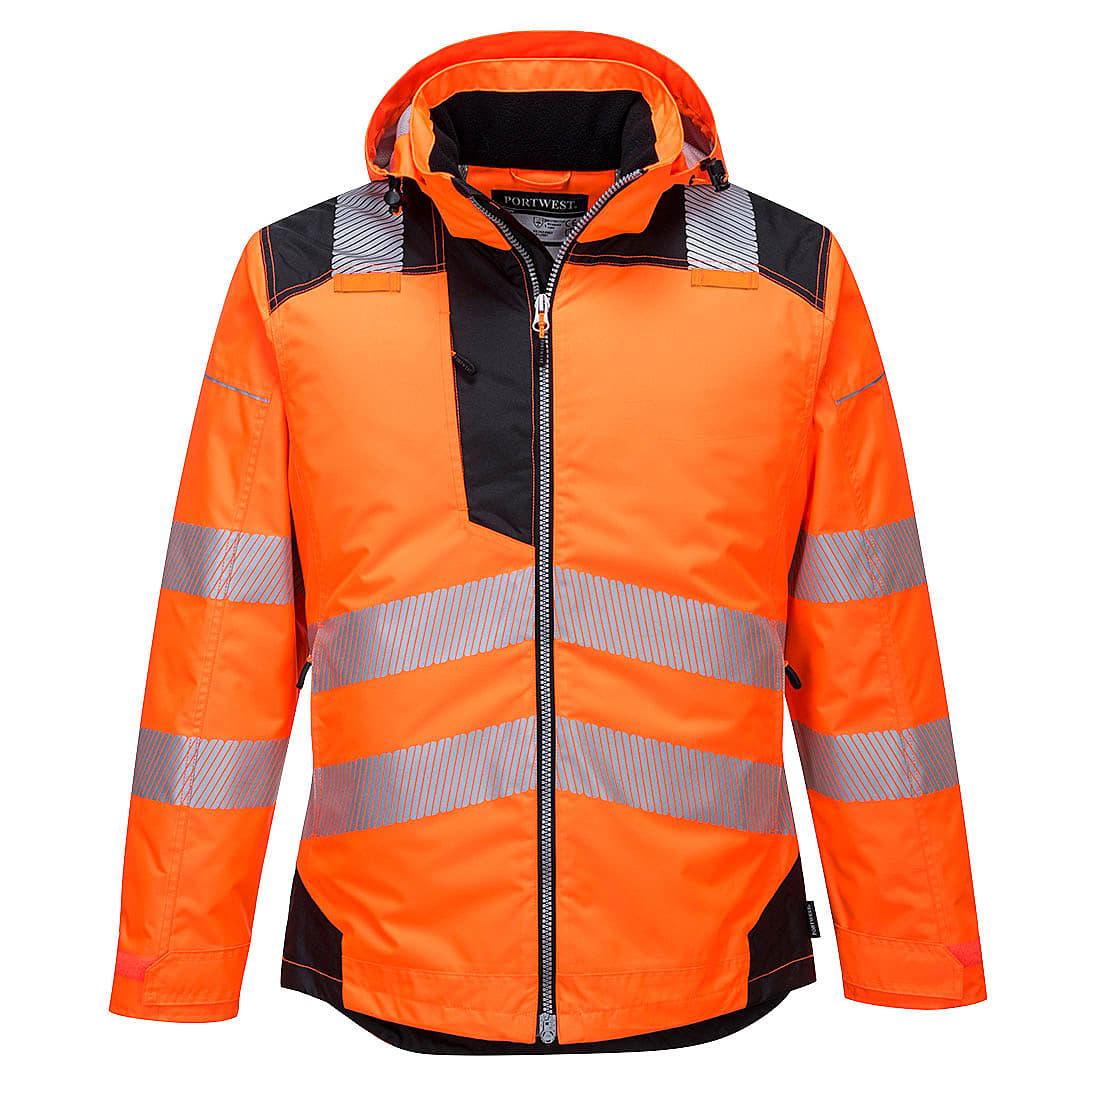 Portwest PW3 Hi-Viz Winter Jacket in Orange / Black (Product Code: T400)